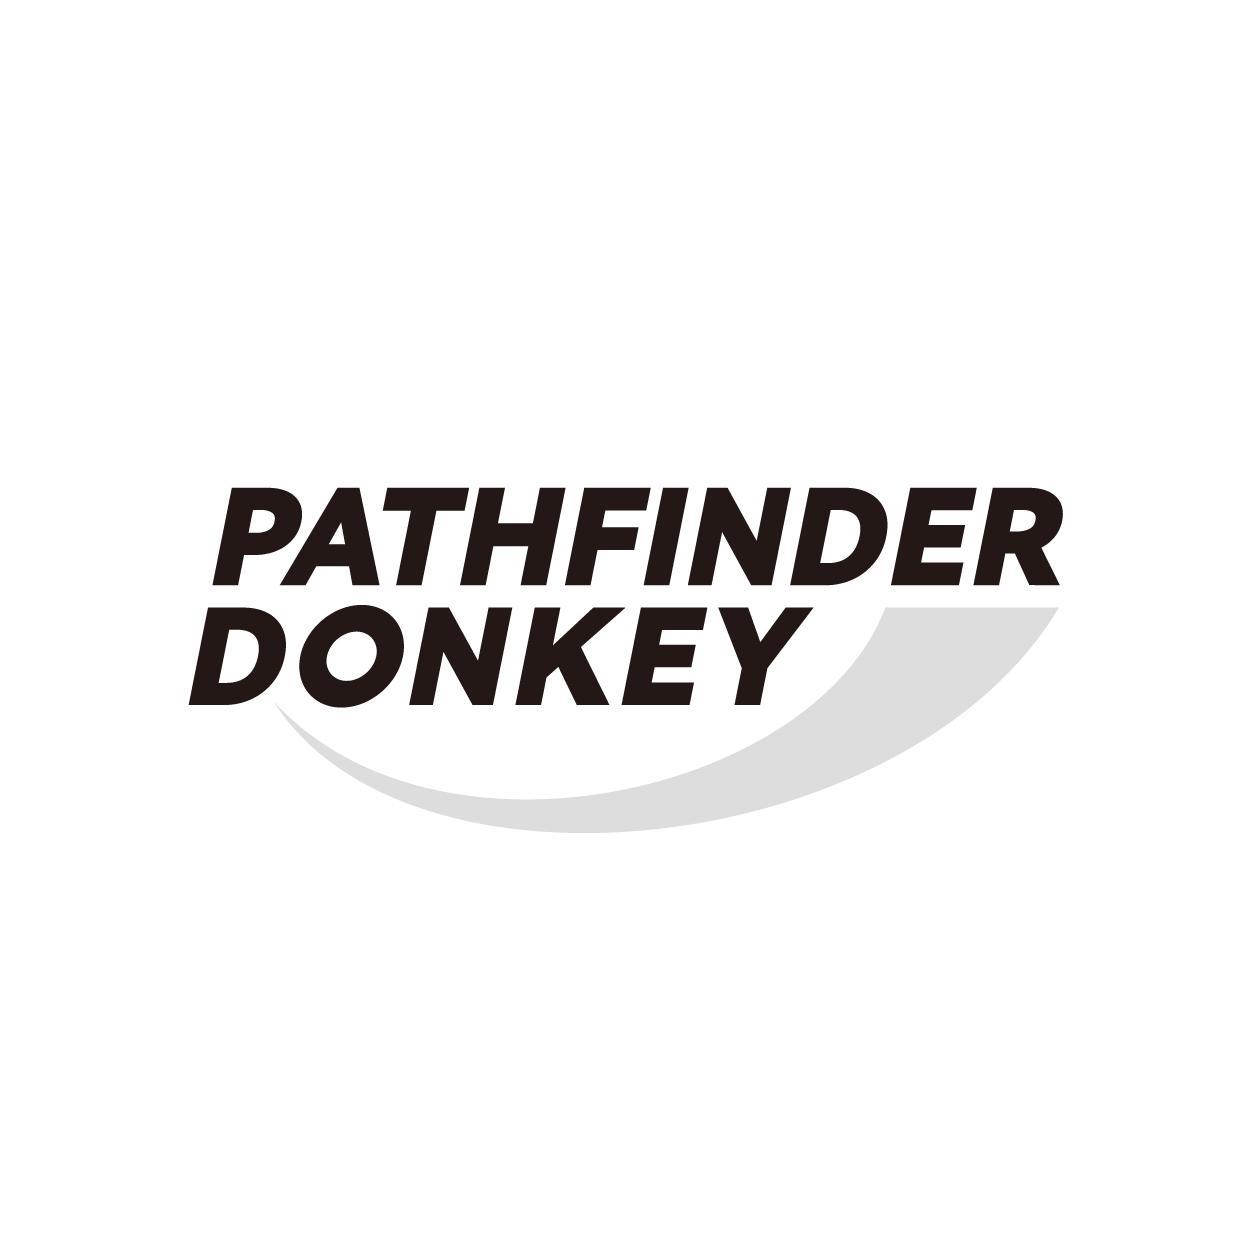 PATHFINDER DONKEY